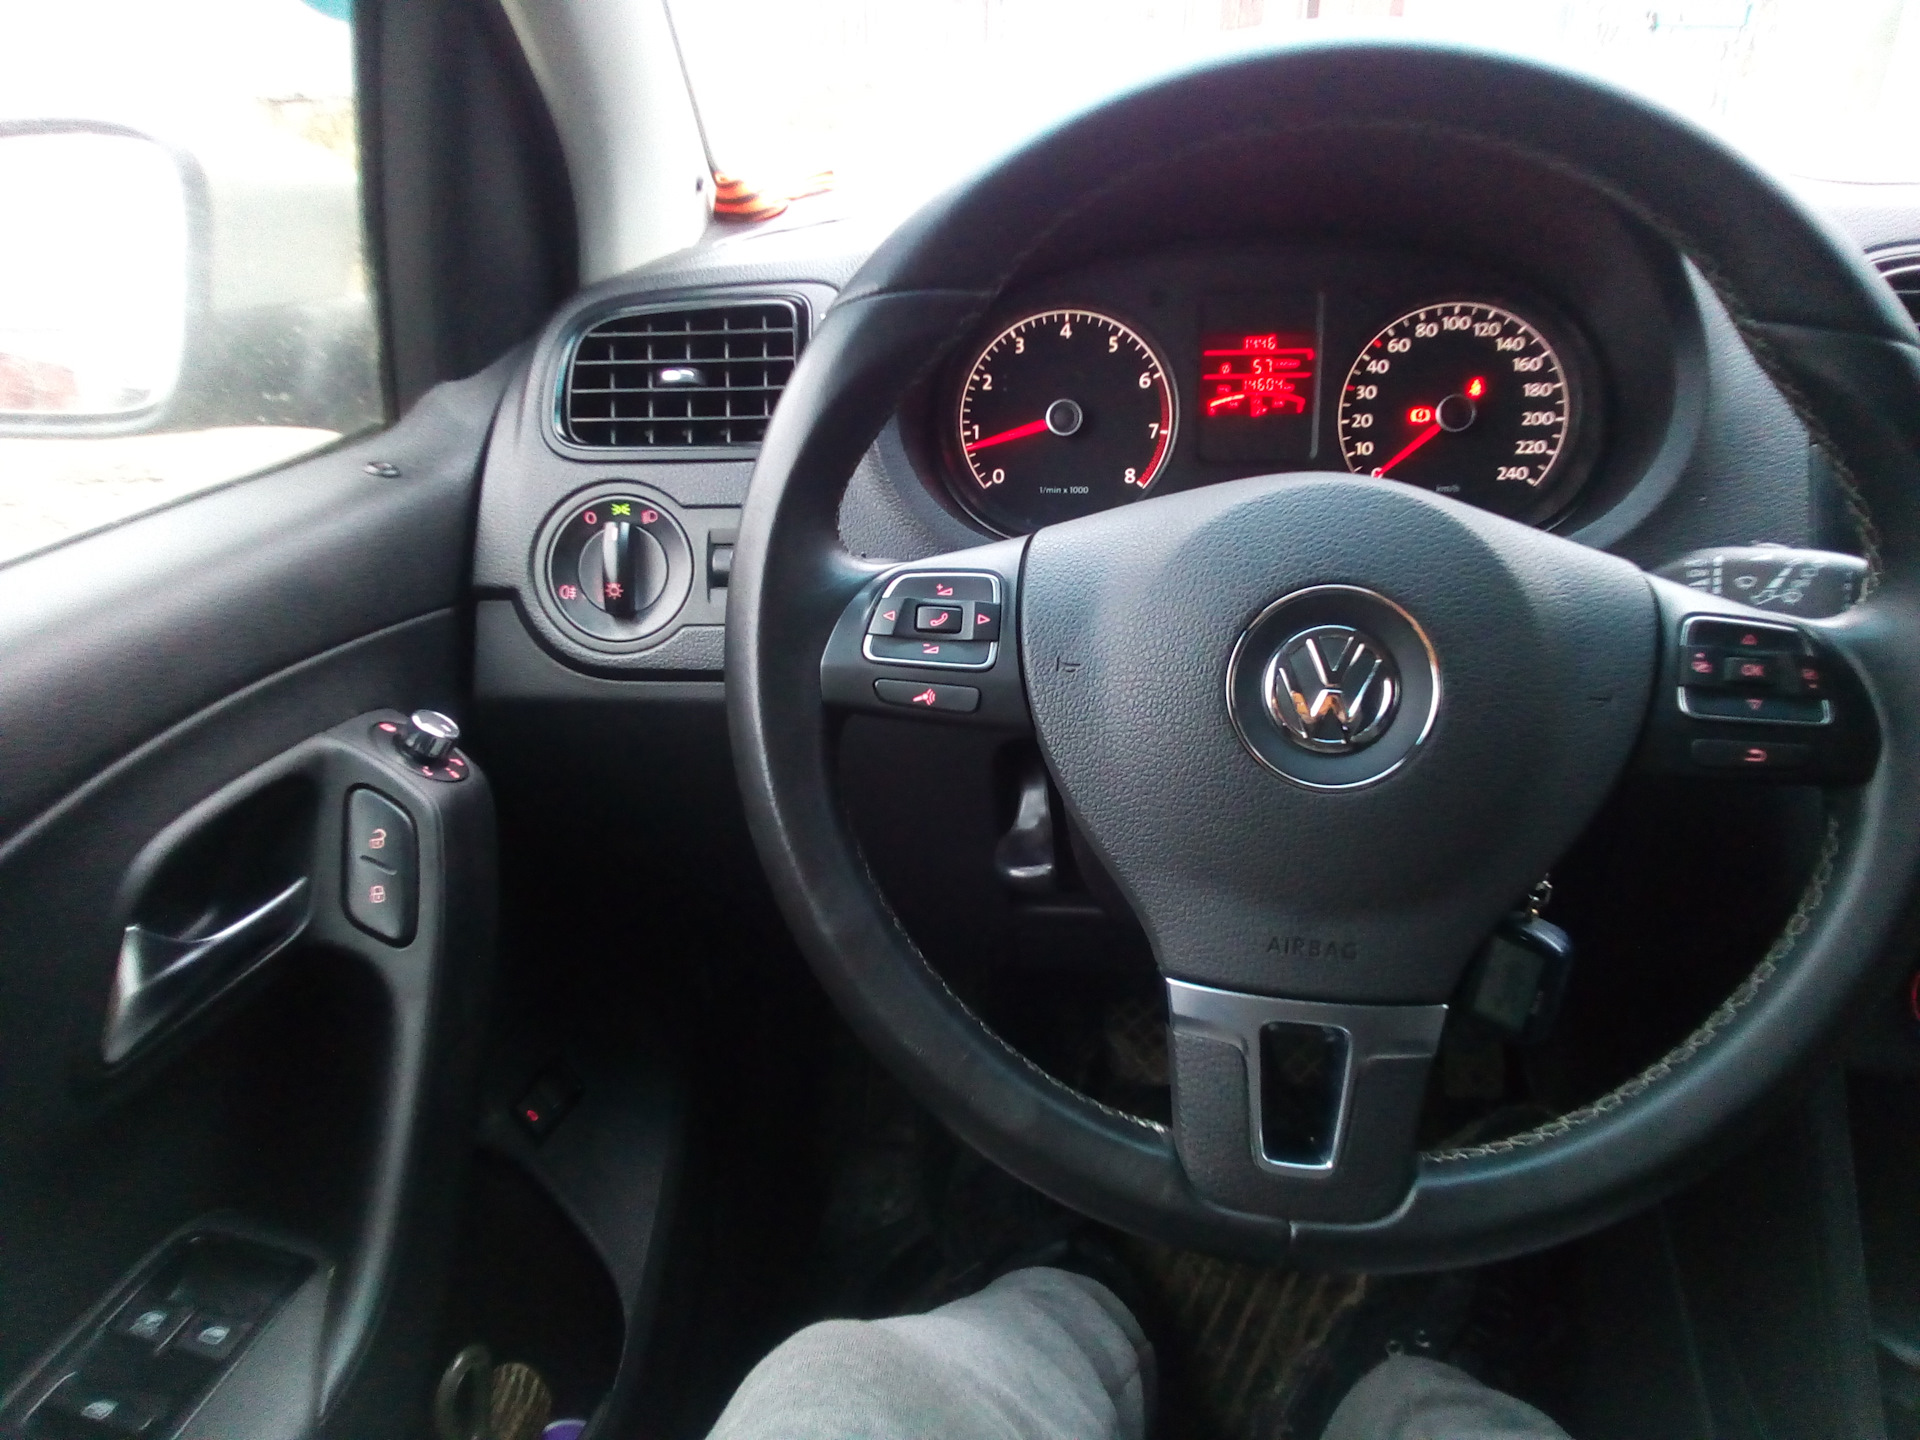 Volkswagen polo зеркала. Джойстик зеркал Фольксваген поло седан. VW Polo v регулировка зеркал. Джойстик на WV поло седан. Регулировка зеркал поло седан.